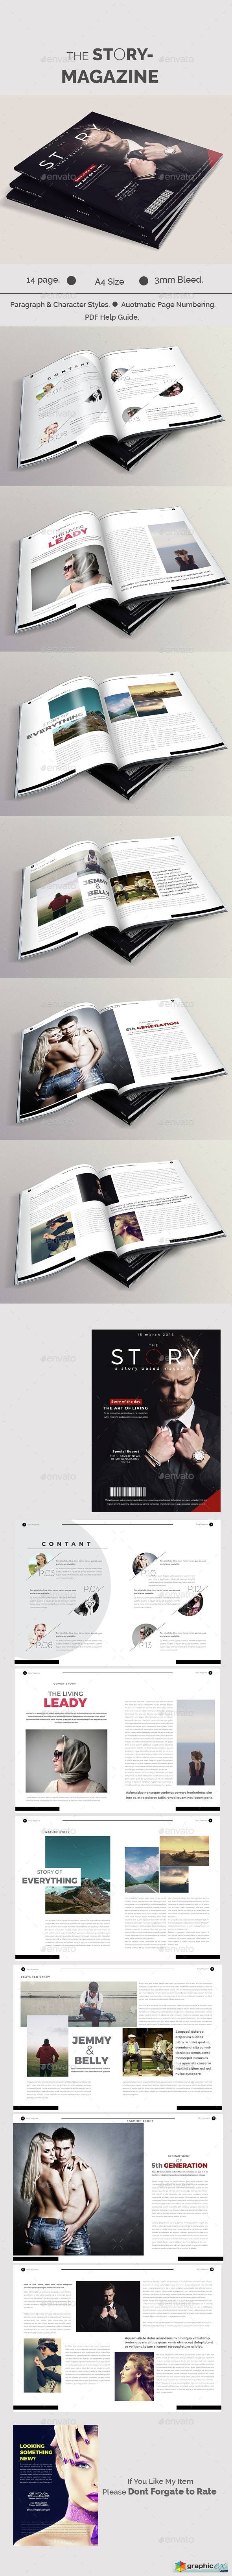 The Story - Magazine